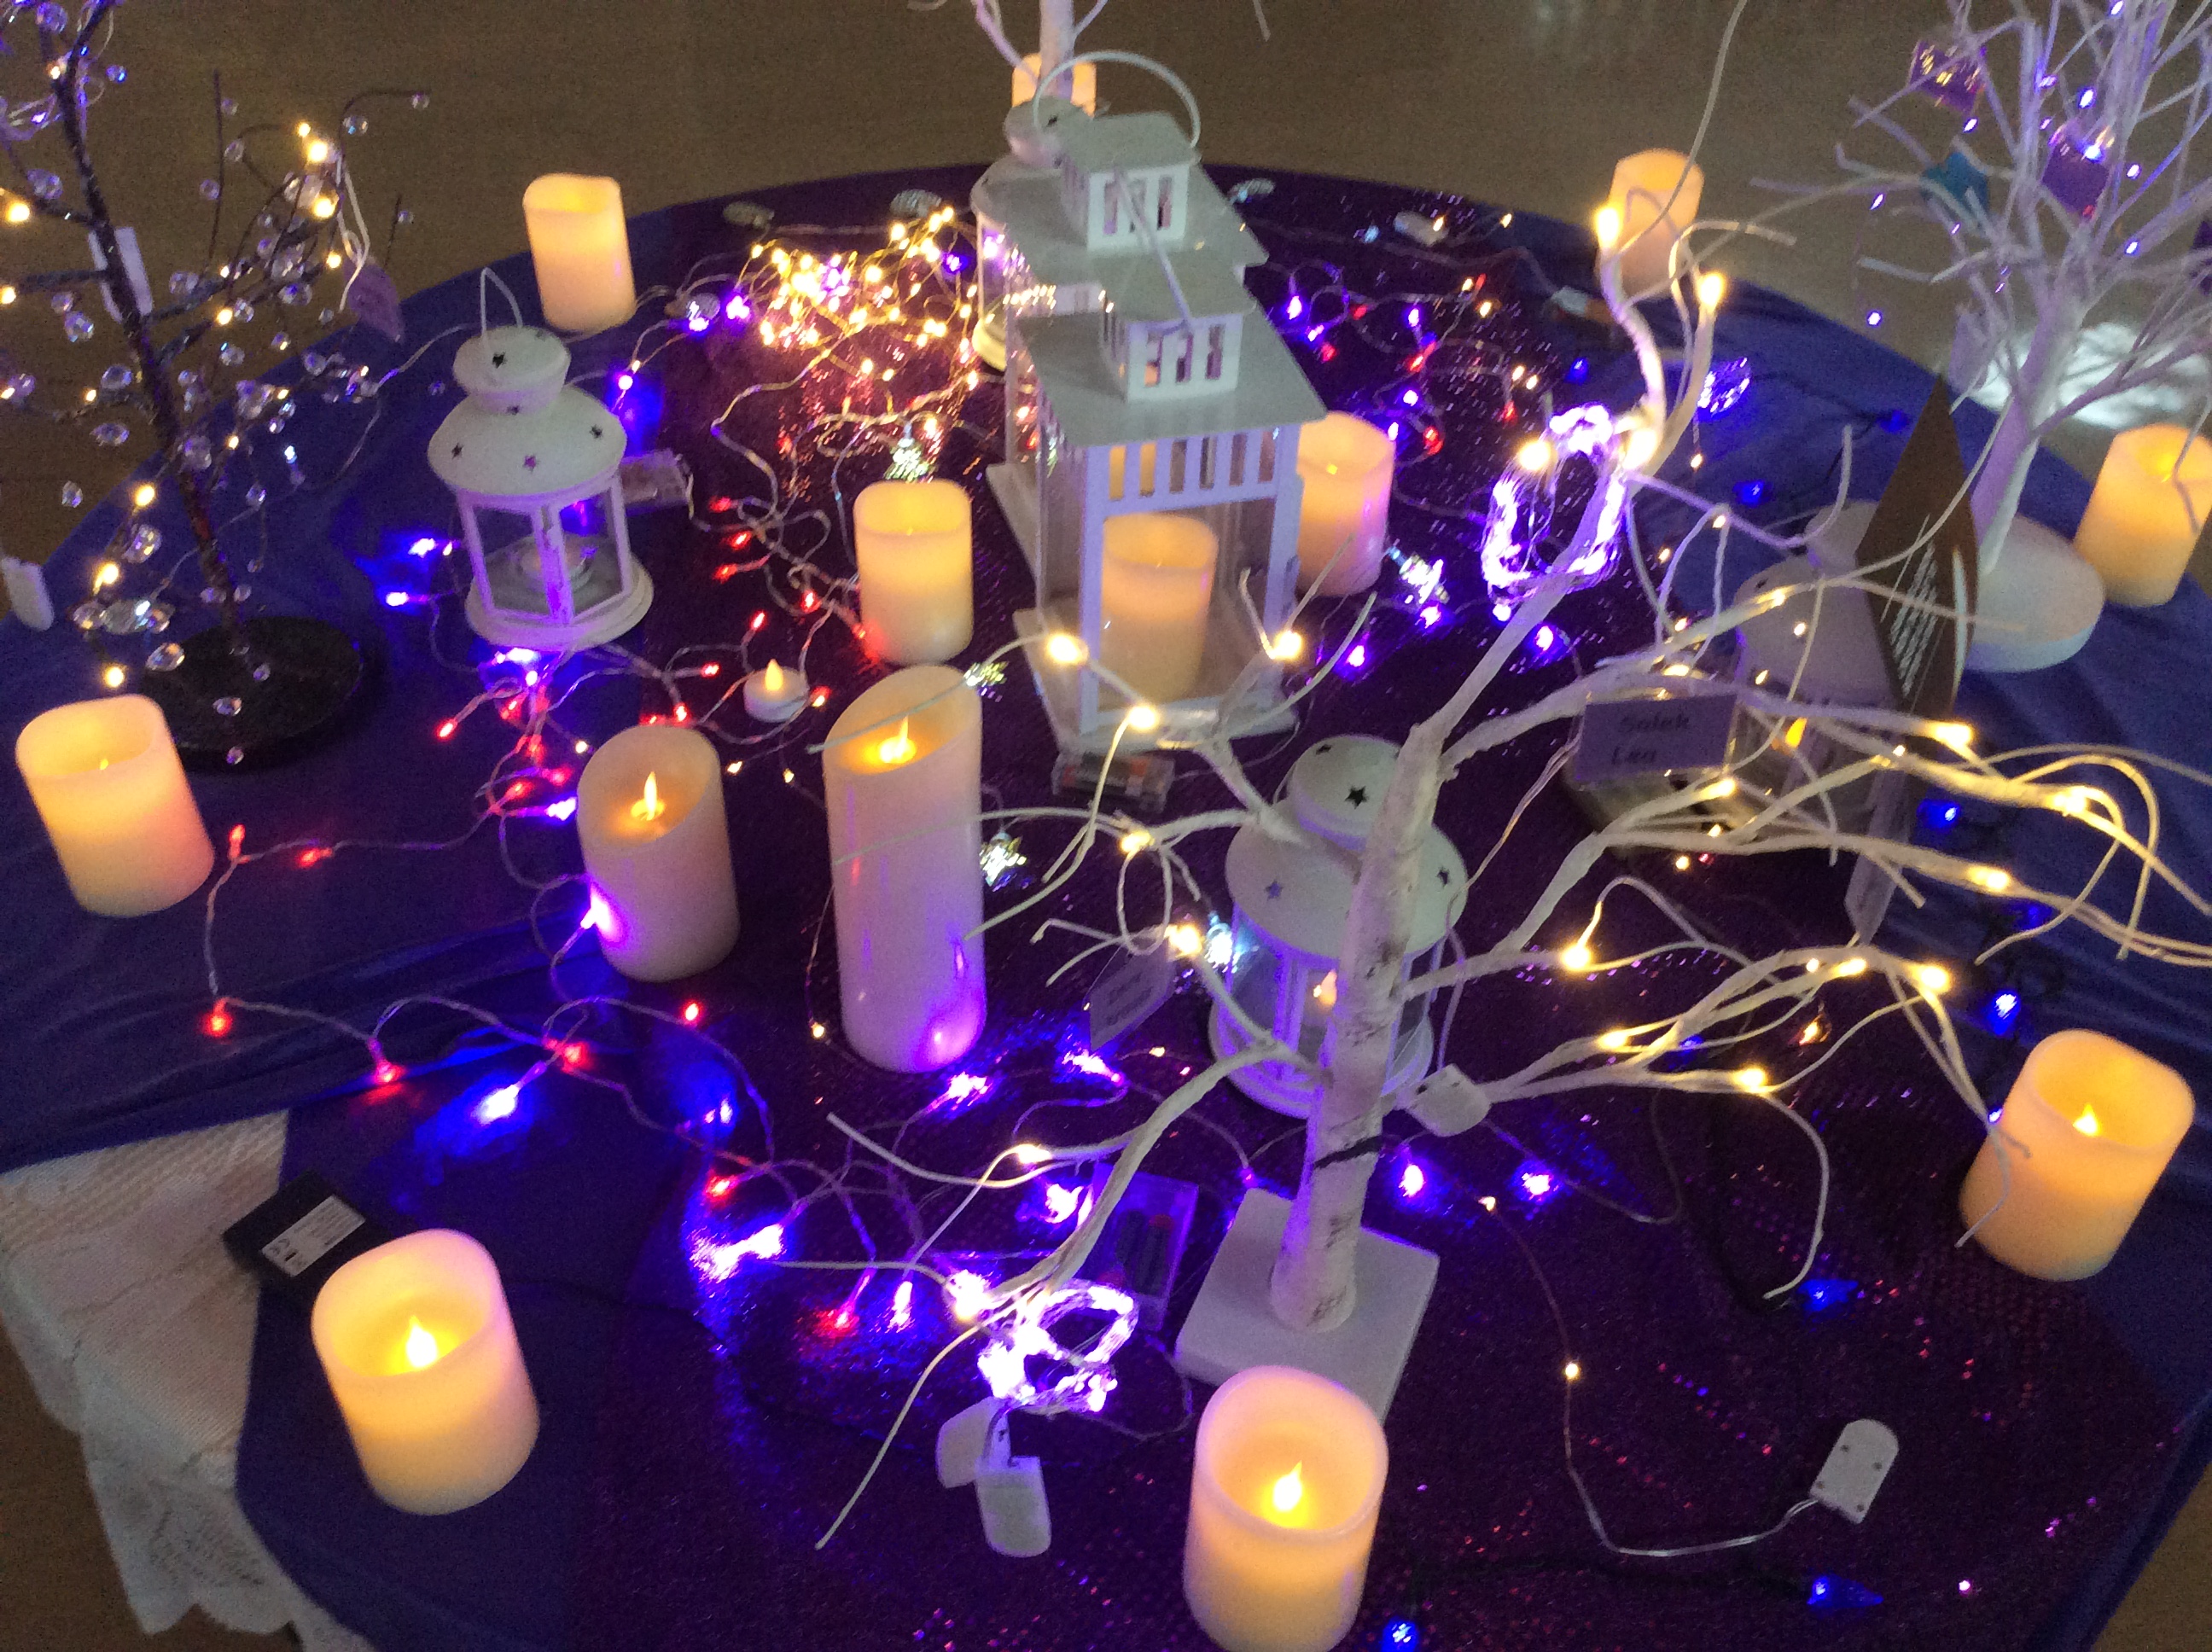 Southcraig School Memory Lights display